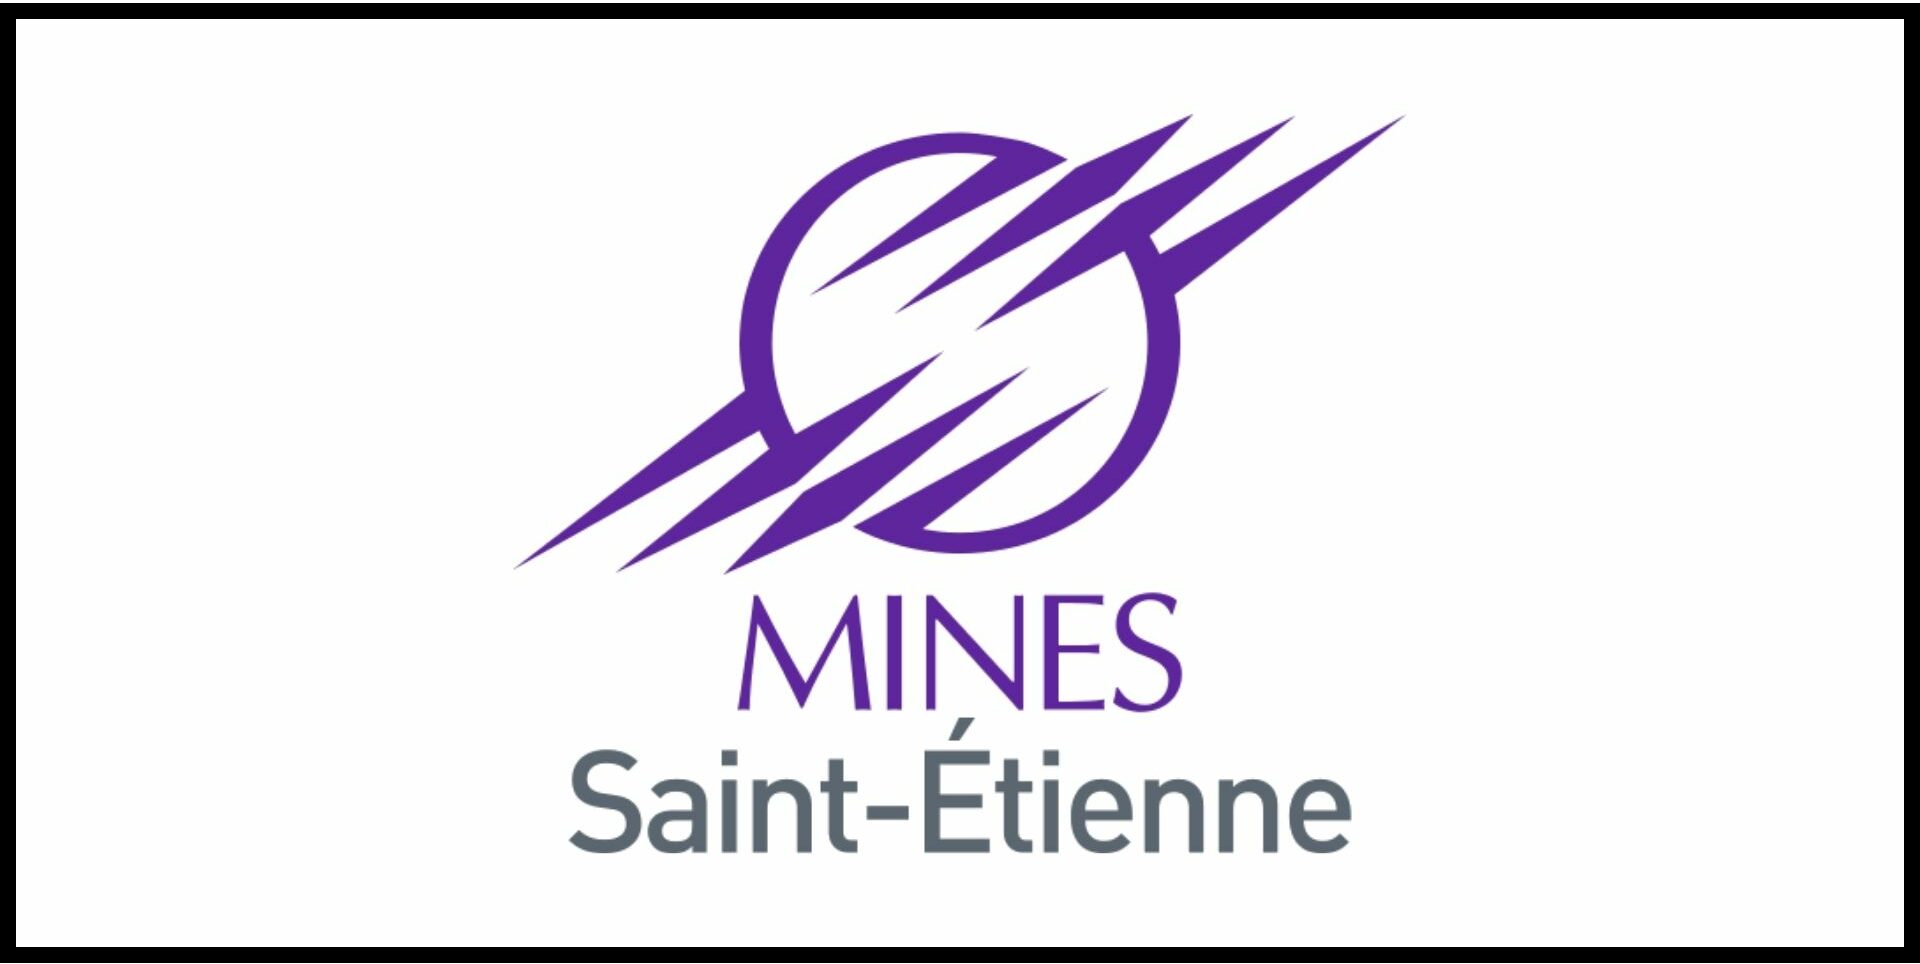 Logo Mines Saint-Etienne